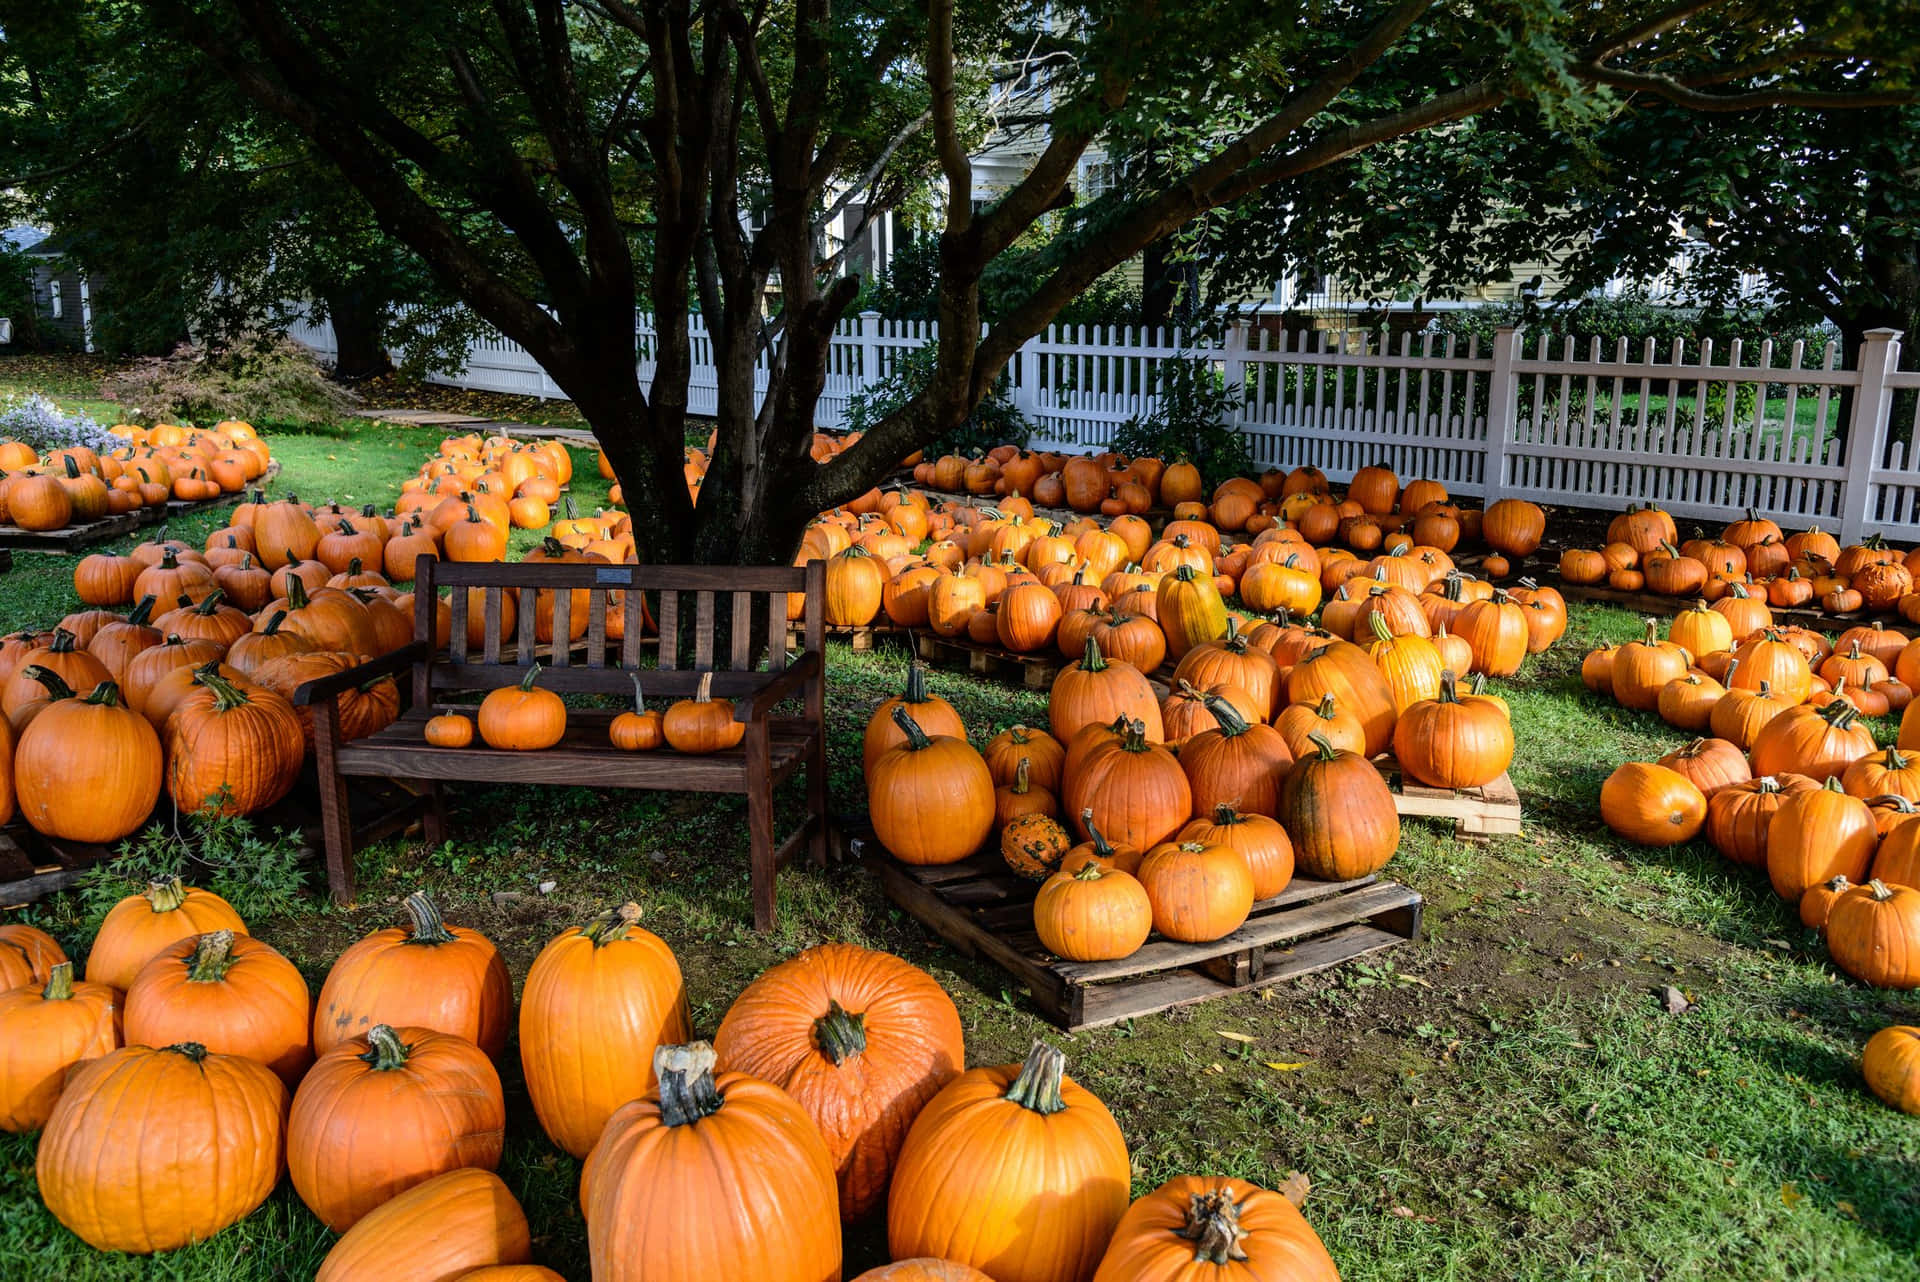 Autumn Harvest - A picturesque fall pumpkin backdrop